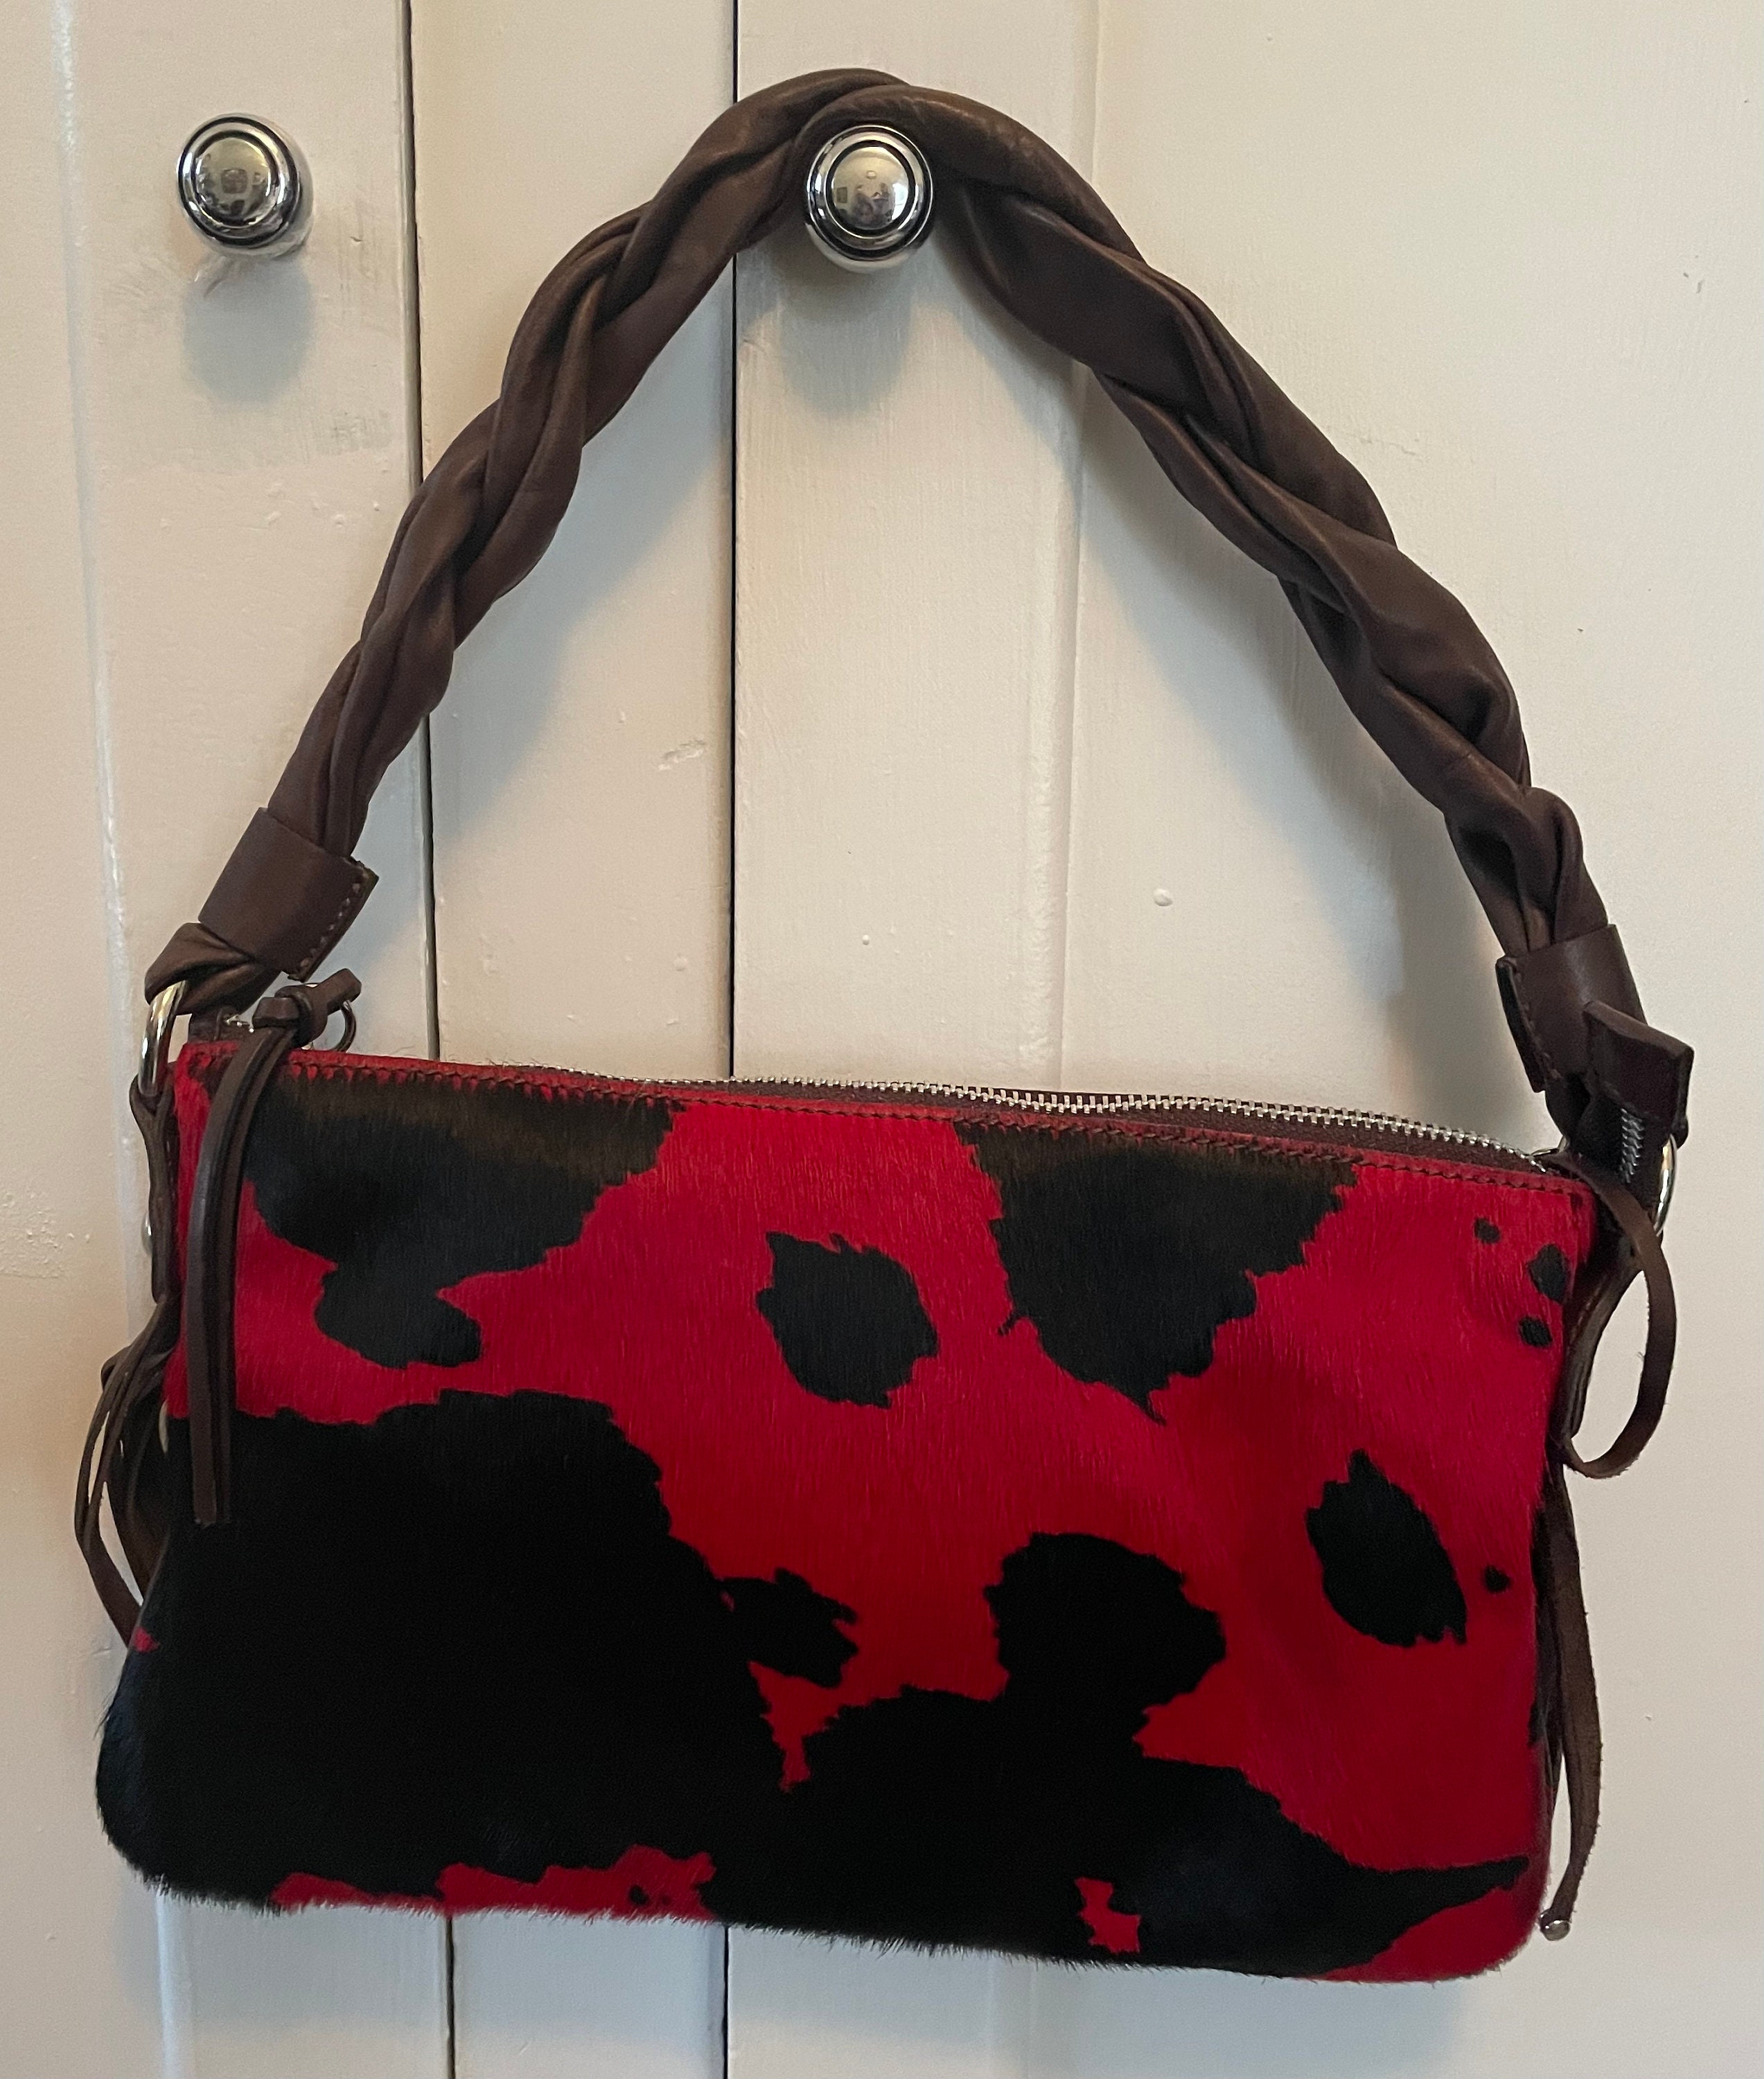 CAVALCANTI Italian Leather Satchel Handbag, Detachable Chain Strap